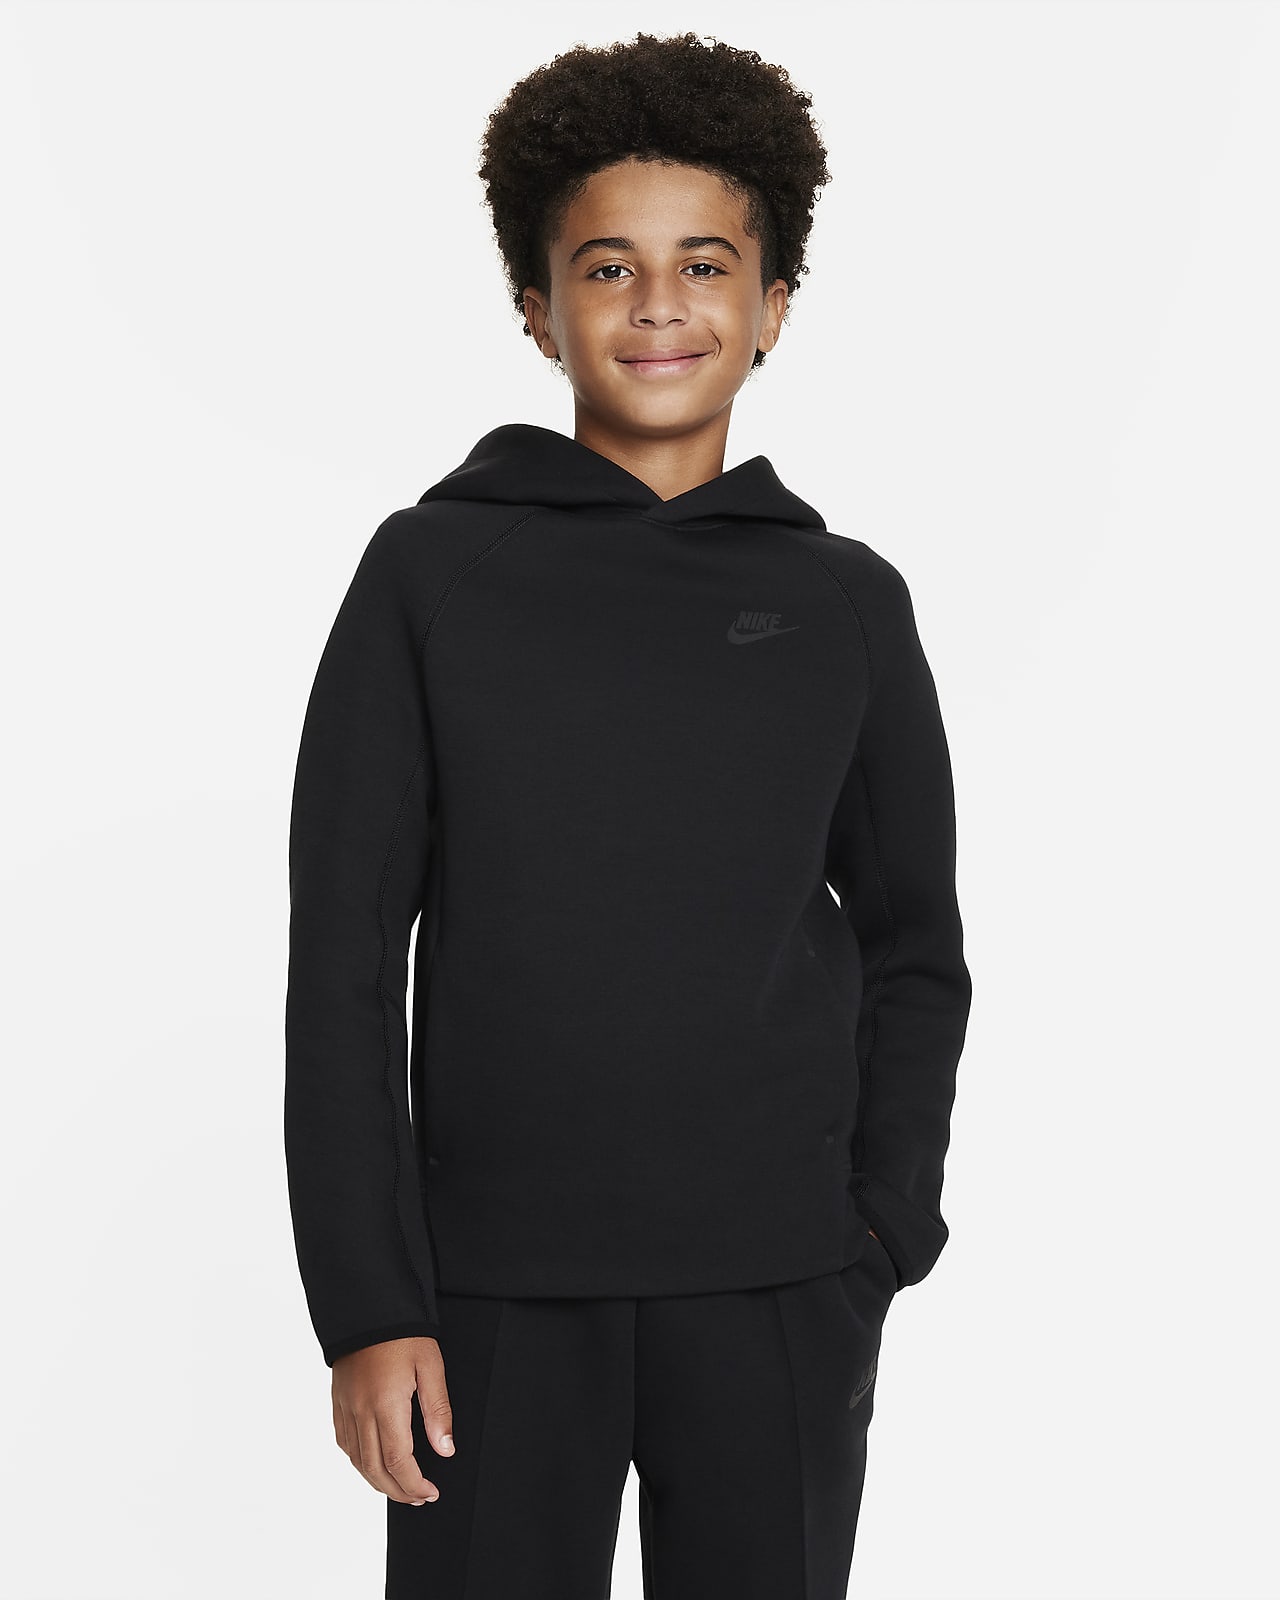 Nike Sportswear Tech Fleece Dessuadora amb caputxa - Nen